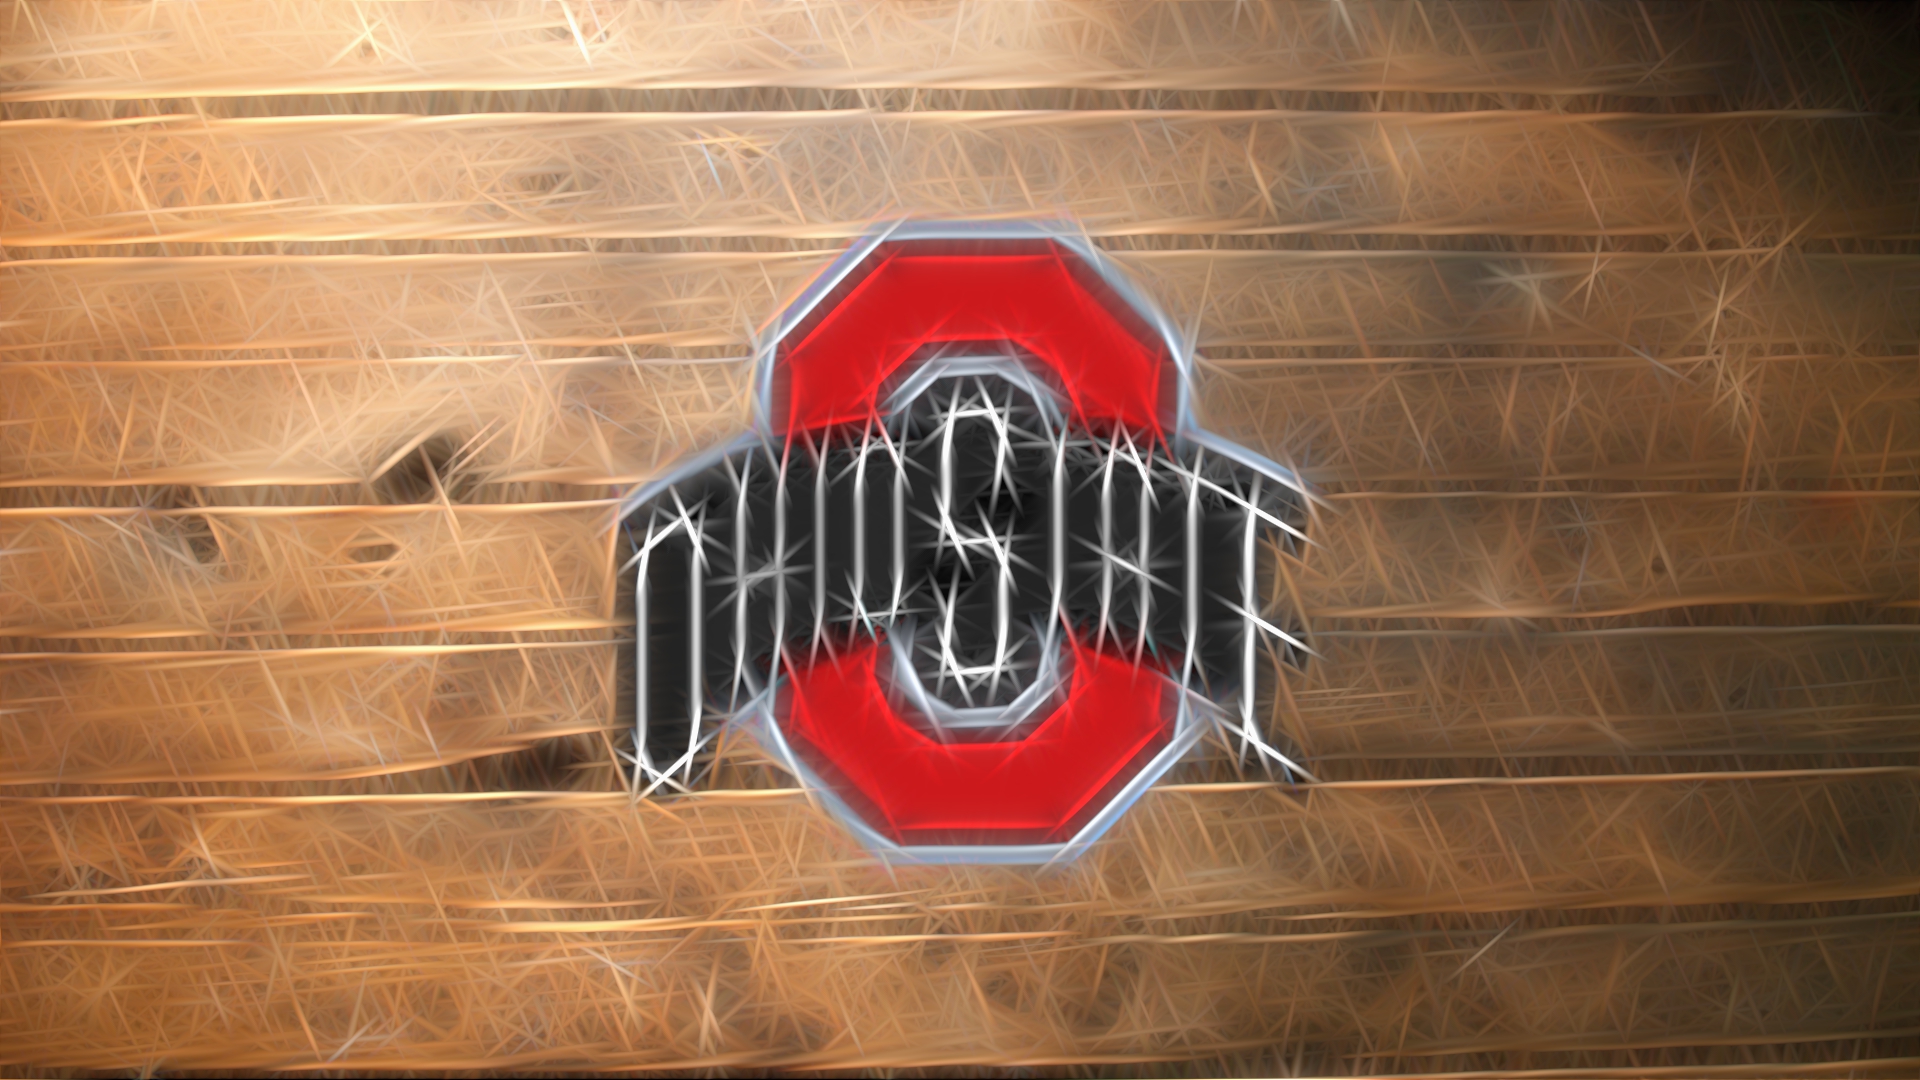 Osu Wallpaper Ohio State Football Jpg